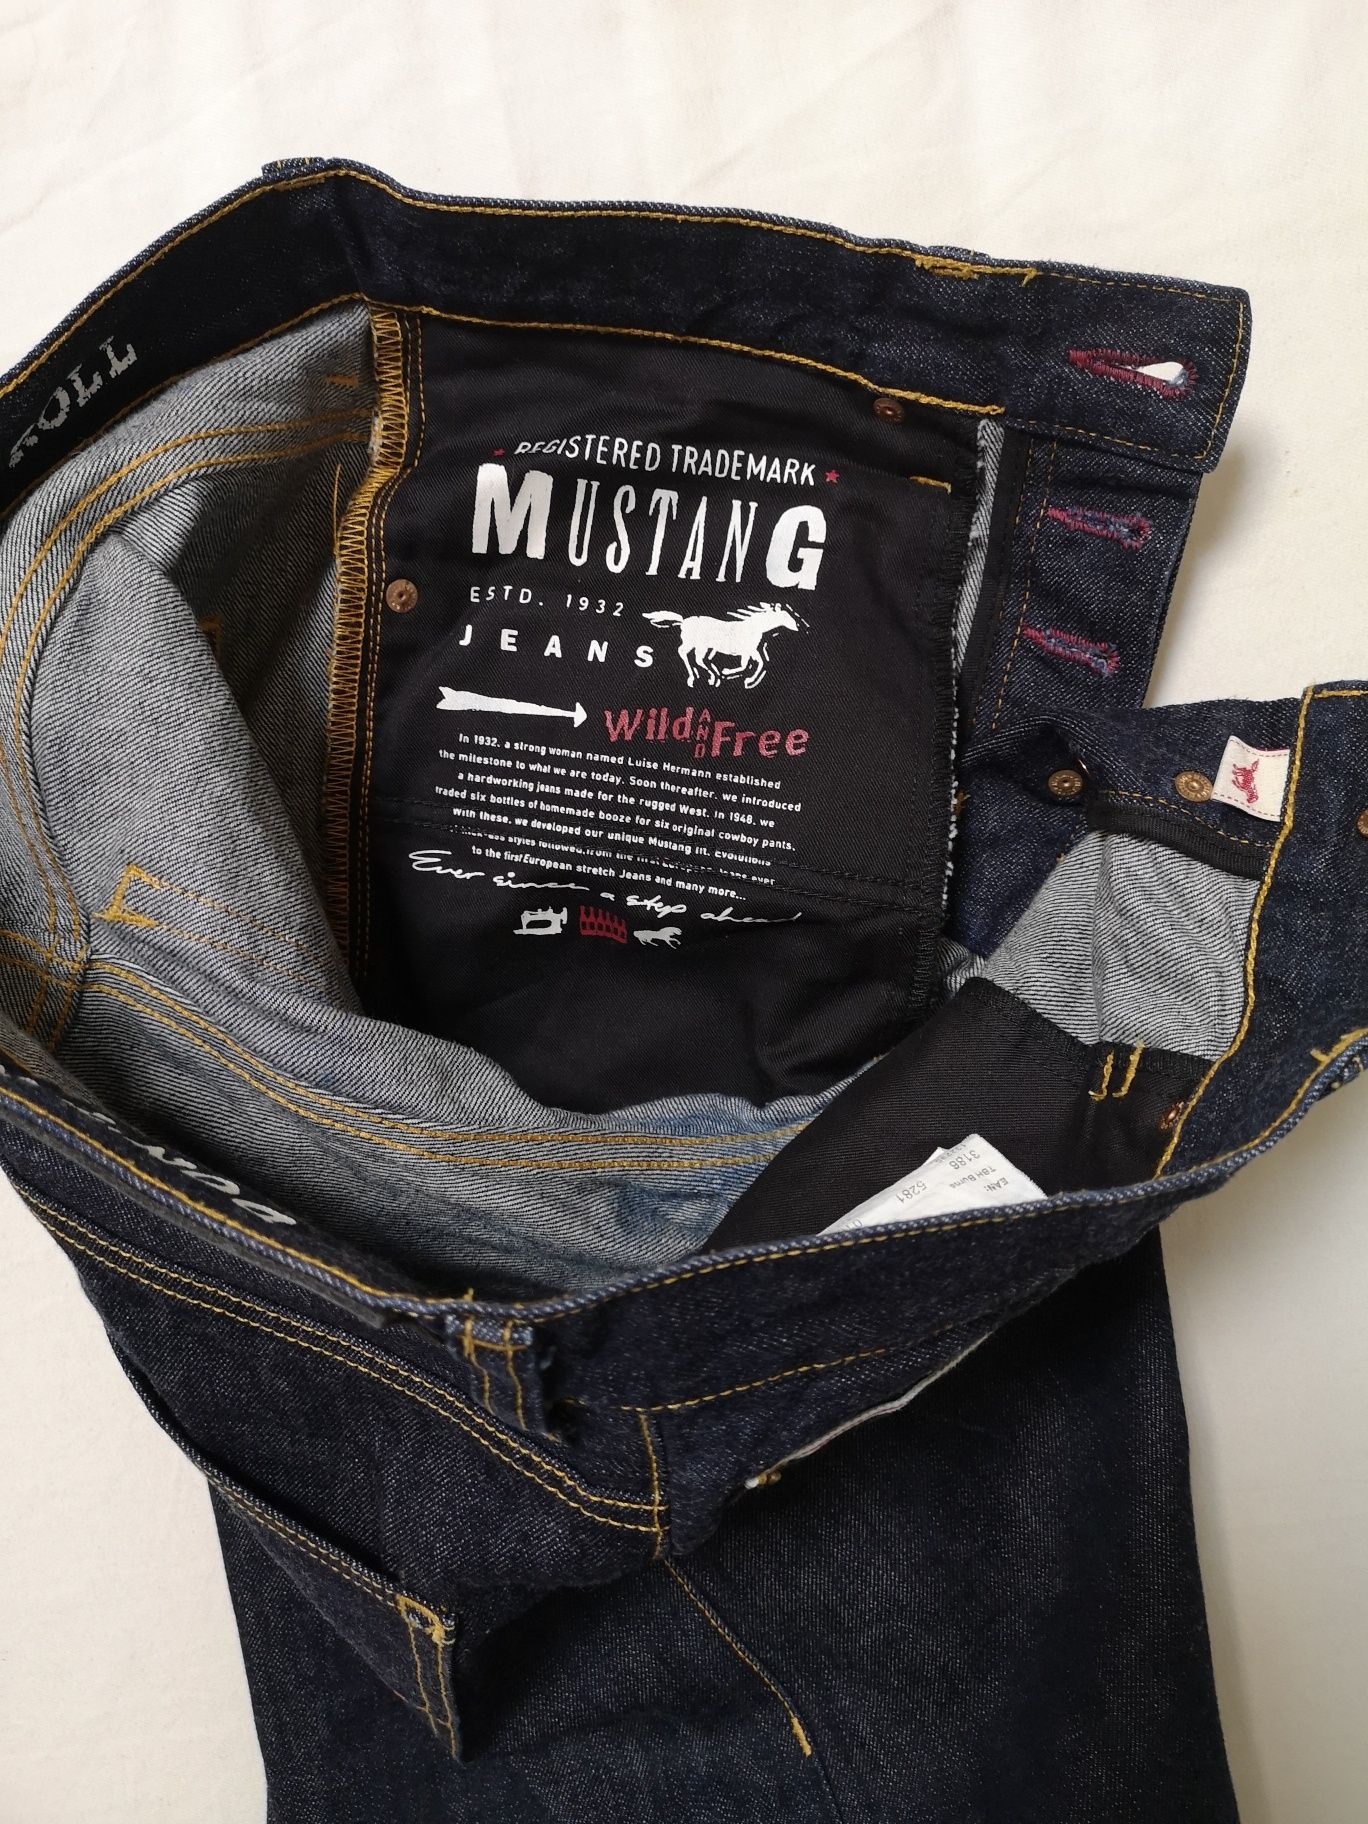 Mustang jeans W32 L34